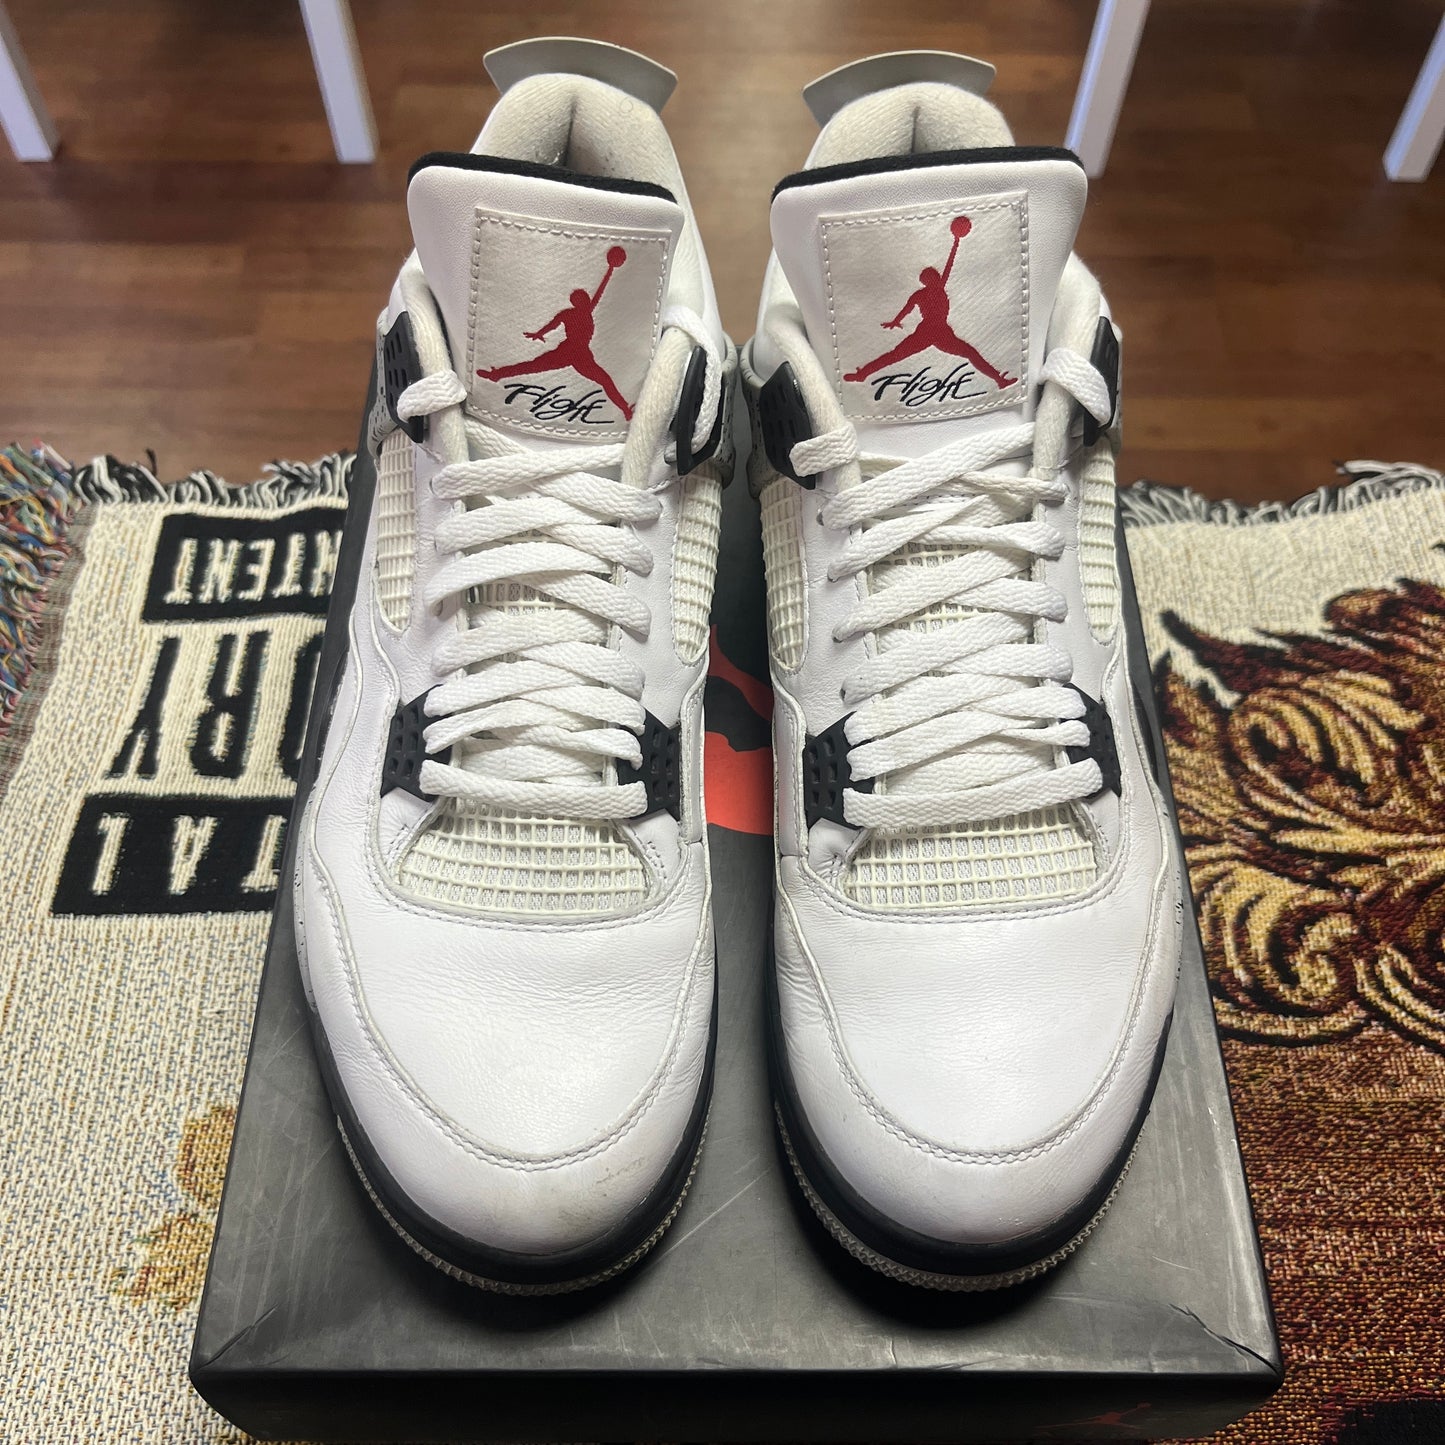 Jordan 4 Retro White Cement (2016) - Preloved